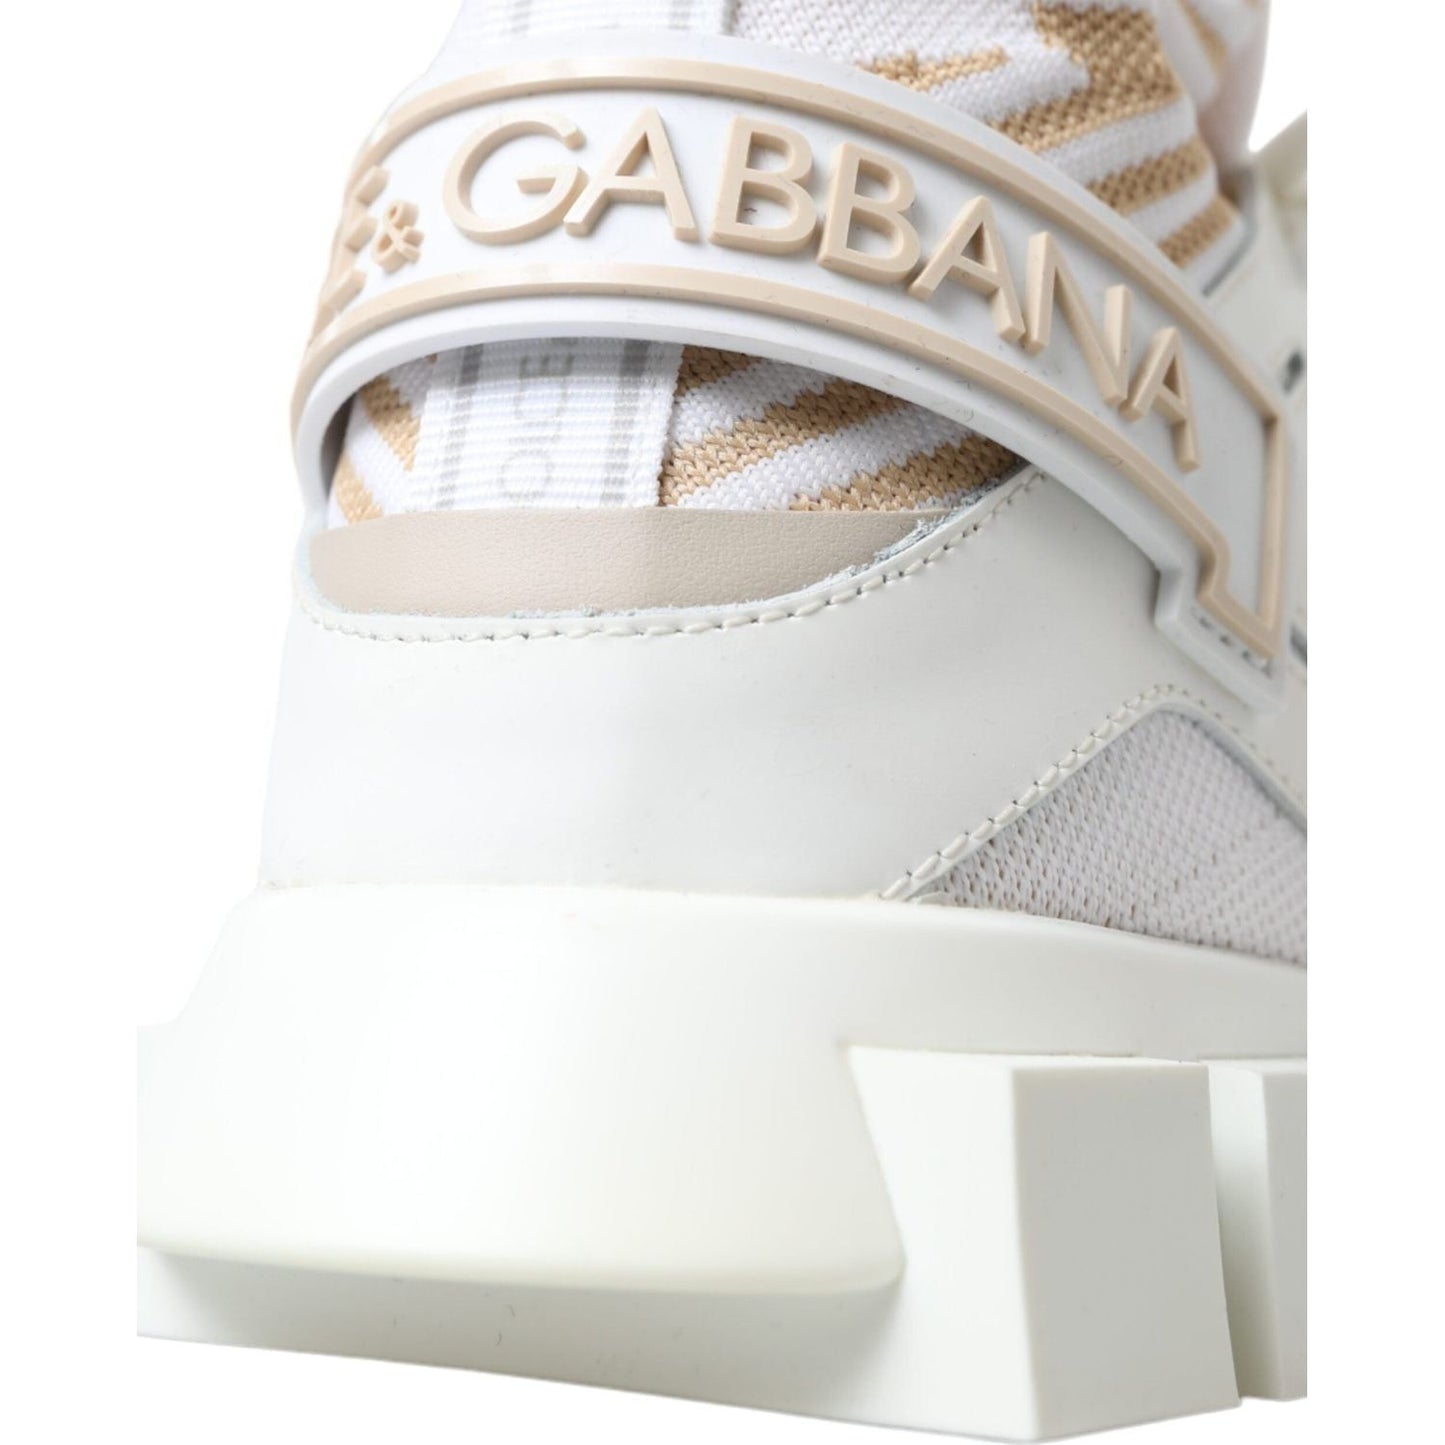 Dolce & Gabbana Elegant Sorrento Slip-On Sneakers in White and Beige white-beige-sorrento-socks-sneakers-shoes-1 465A2451-BG-scaled-3acccc08-c7a.jpg